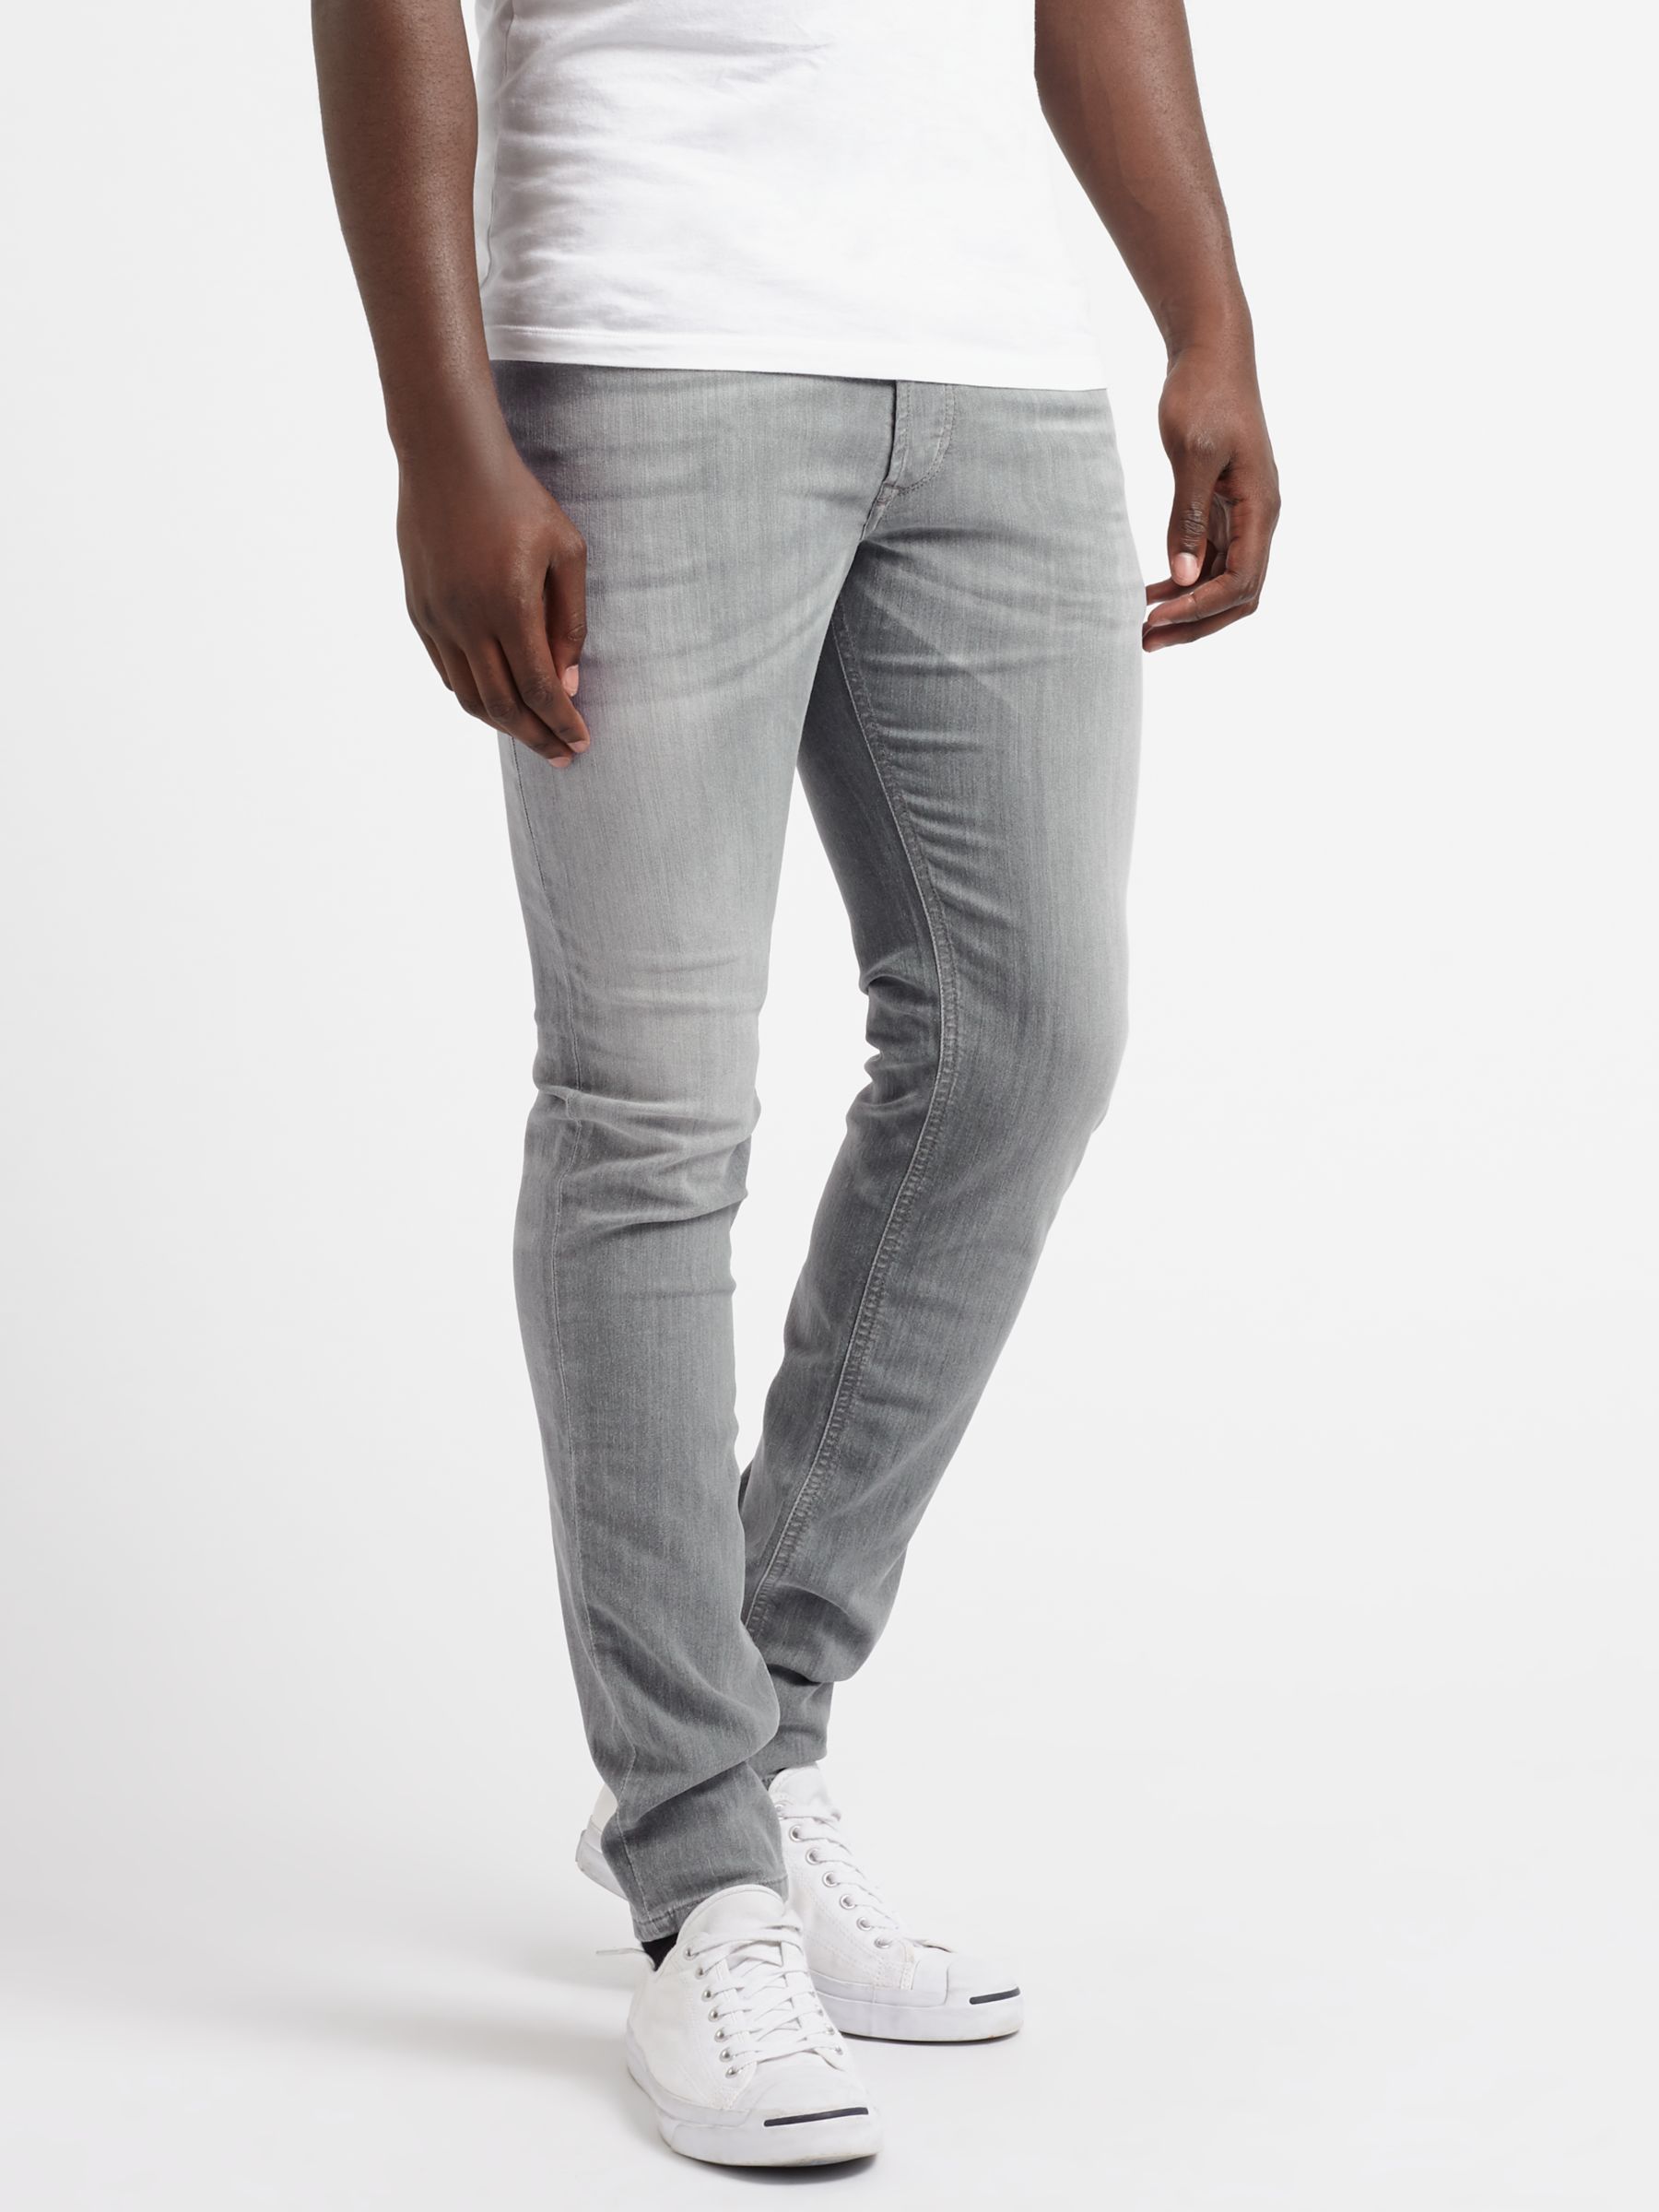 light grey jeans